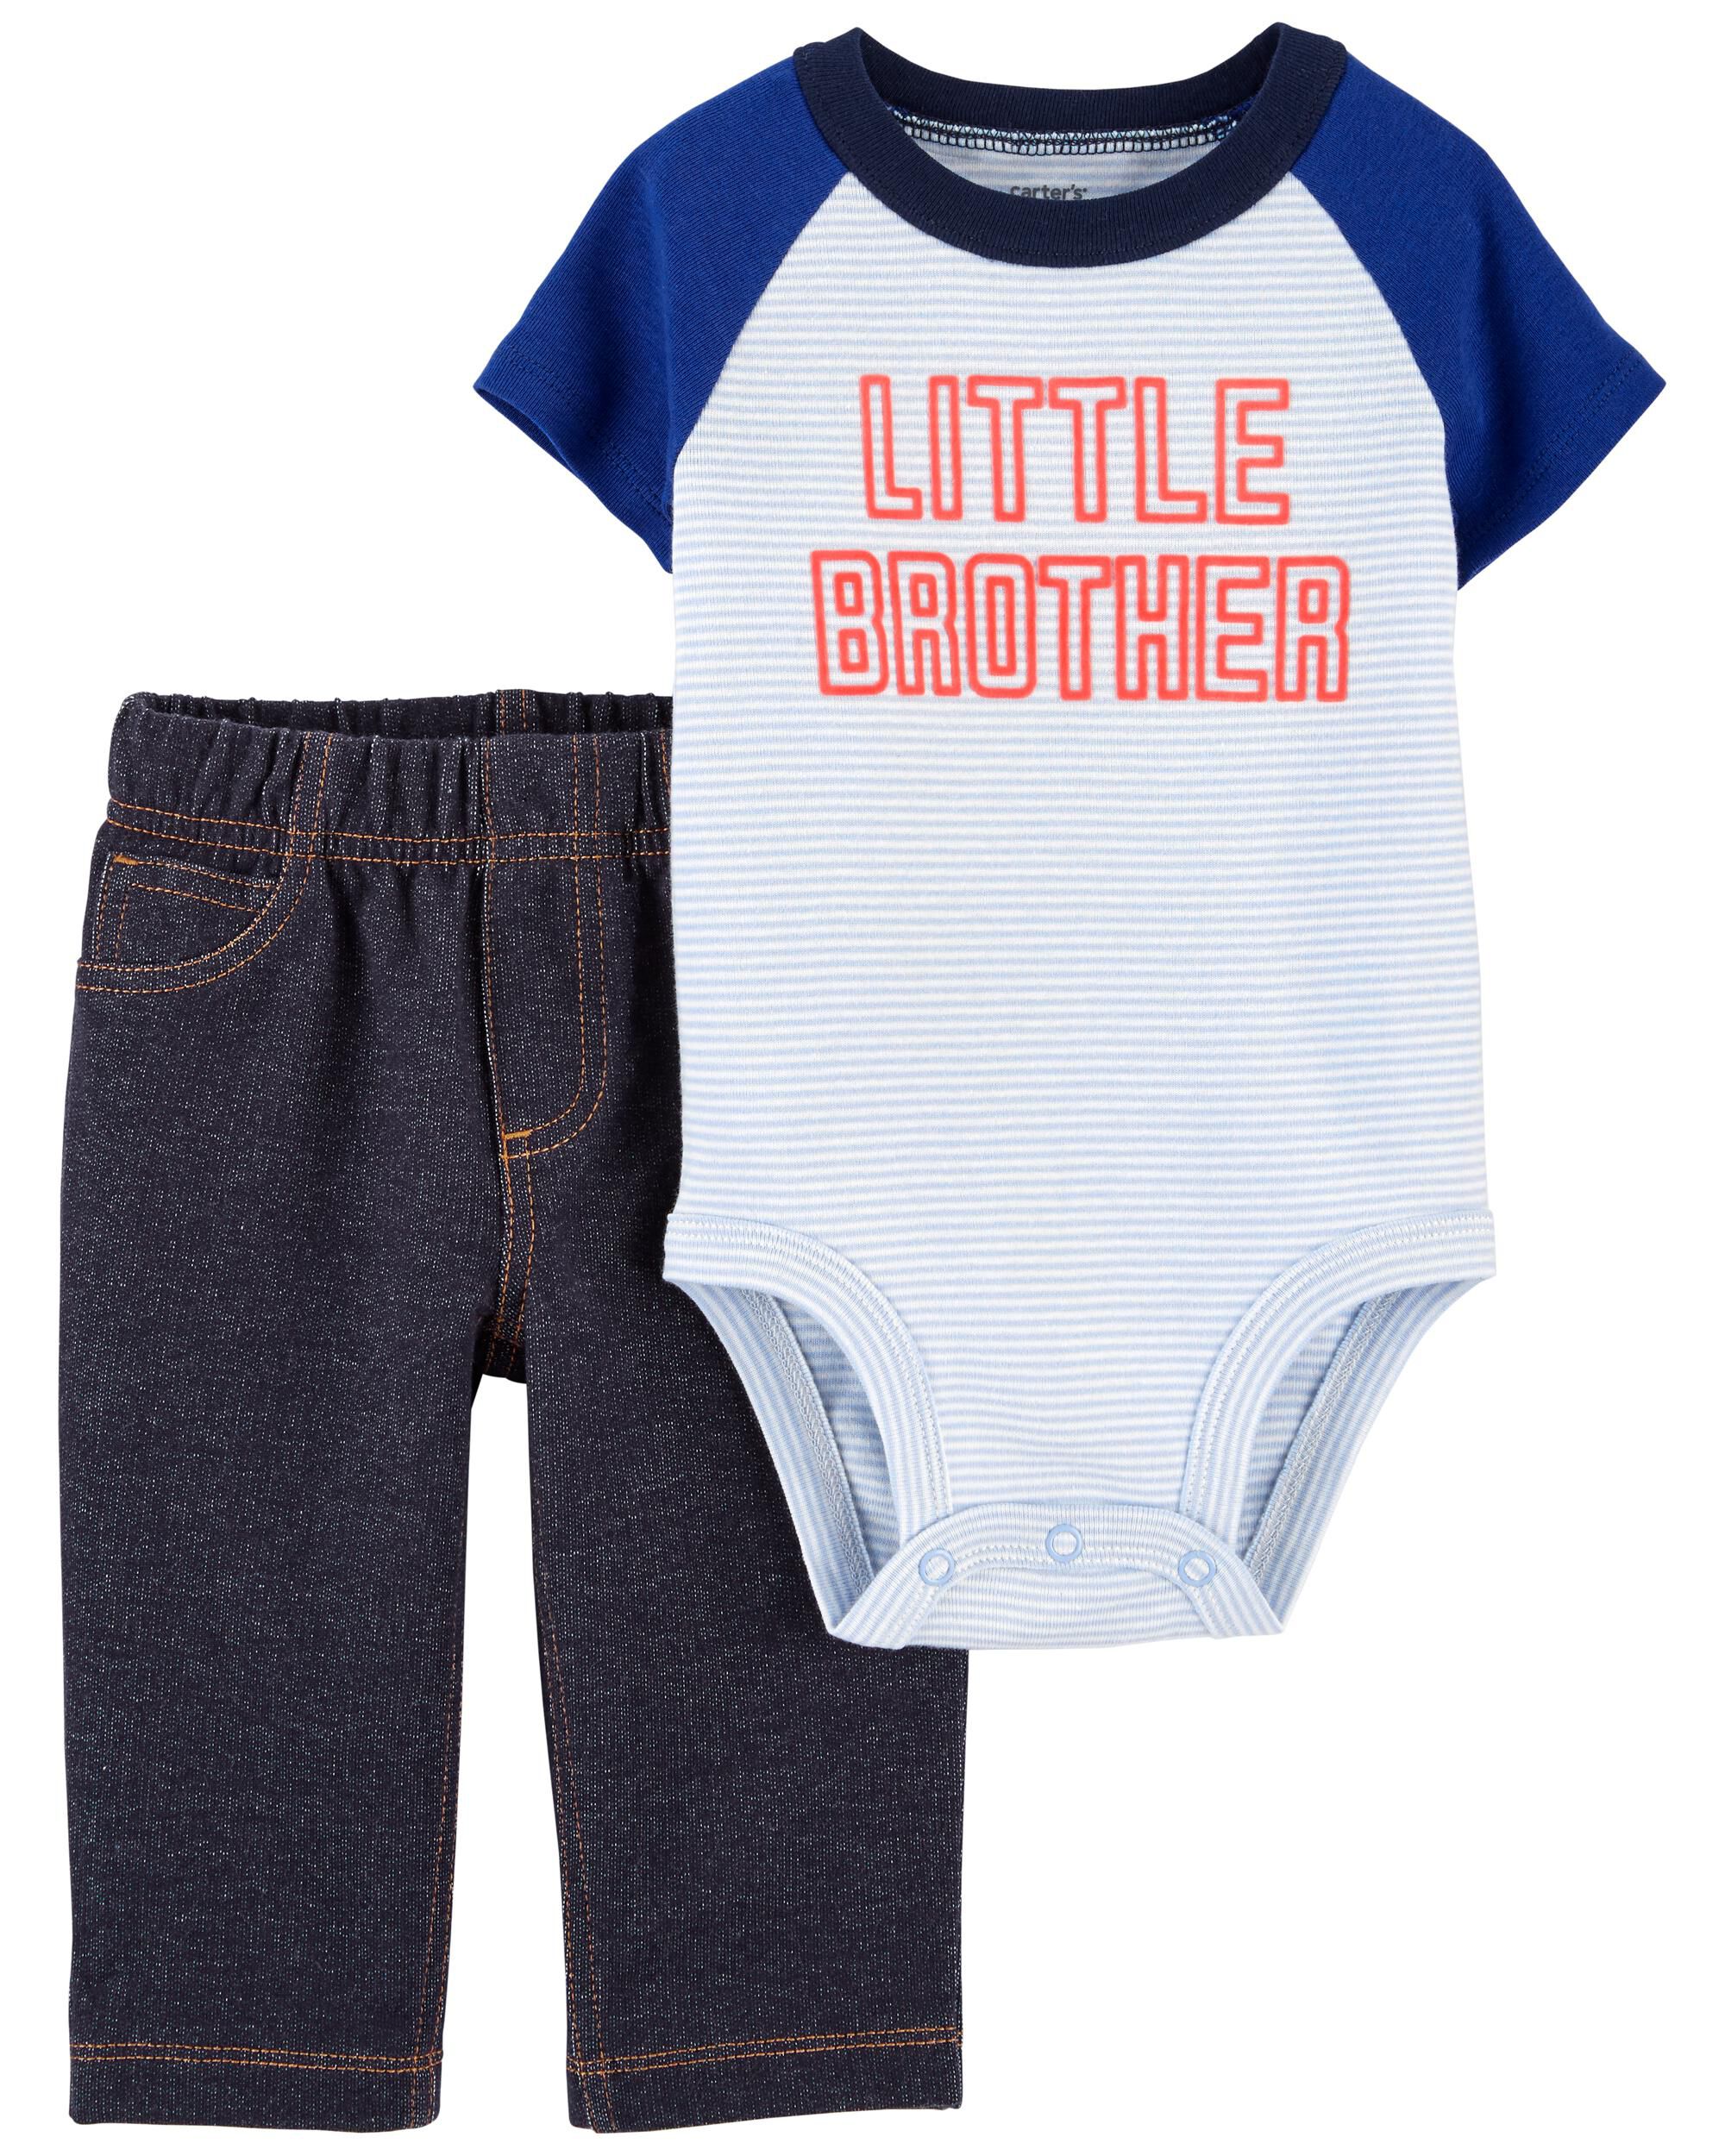 Little Brother Bodysuit Pant Set 